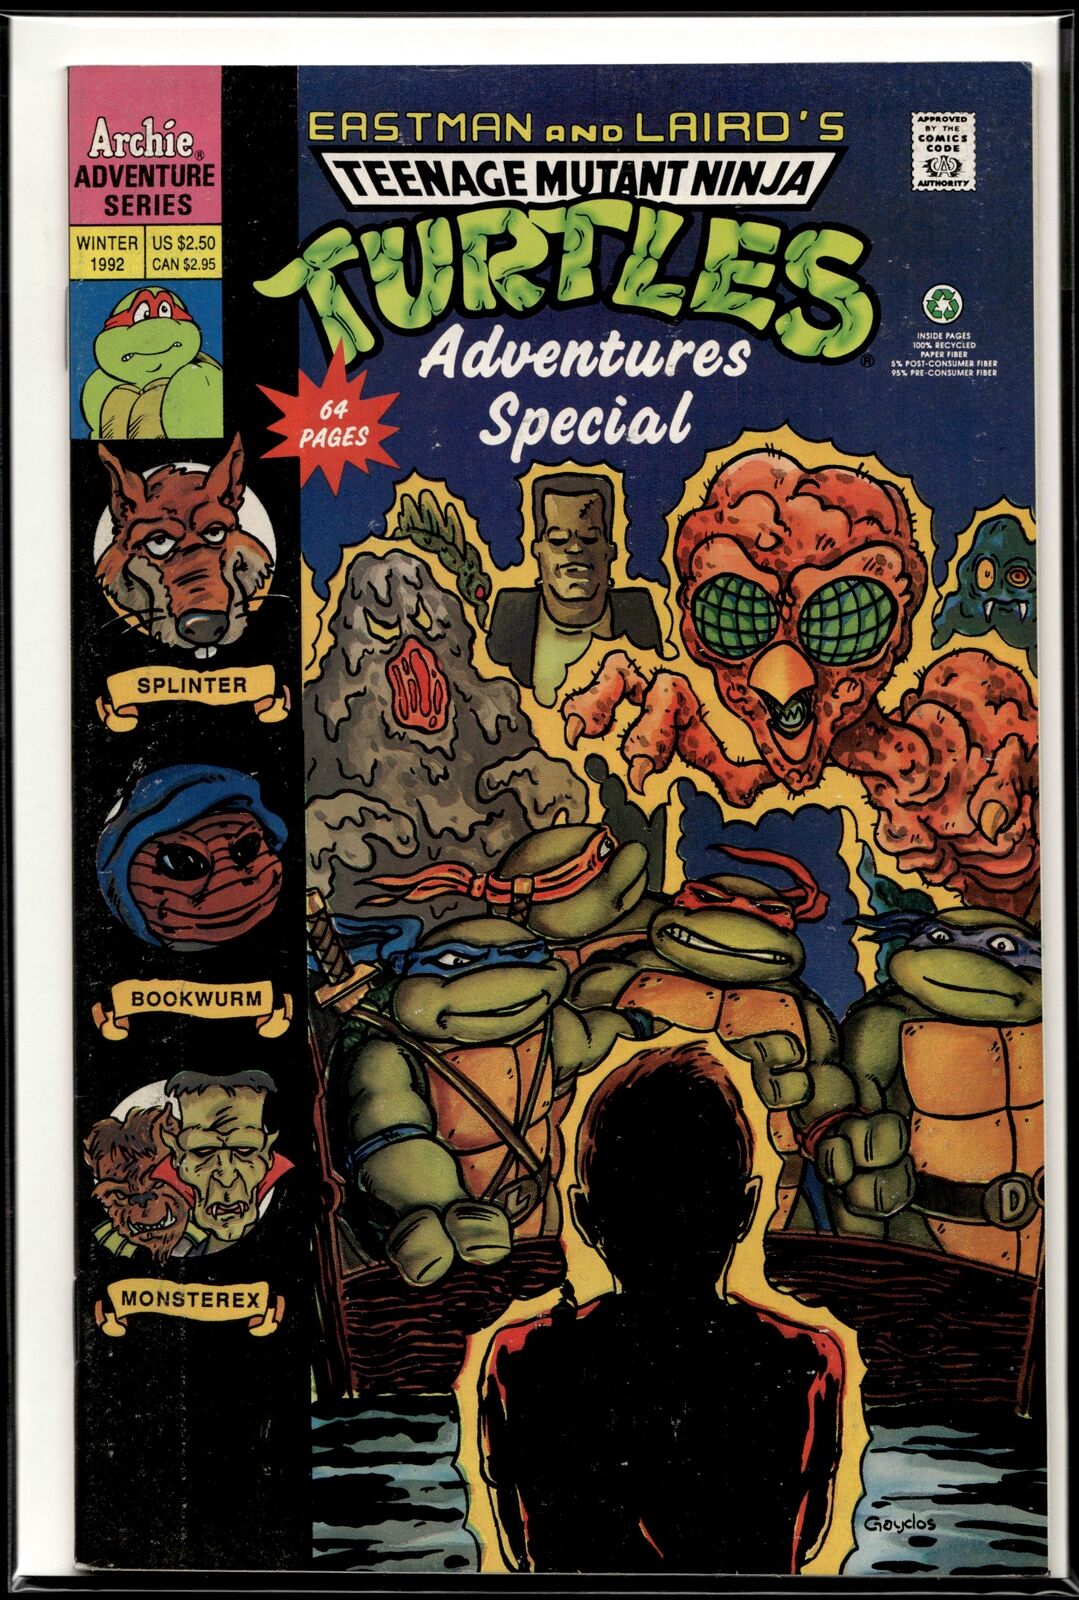 1992 Teenage Mutant Ninja Turtles: Adventures Special #WINTER Archie Comic